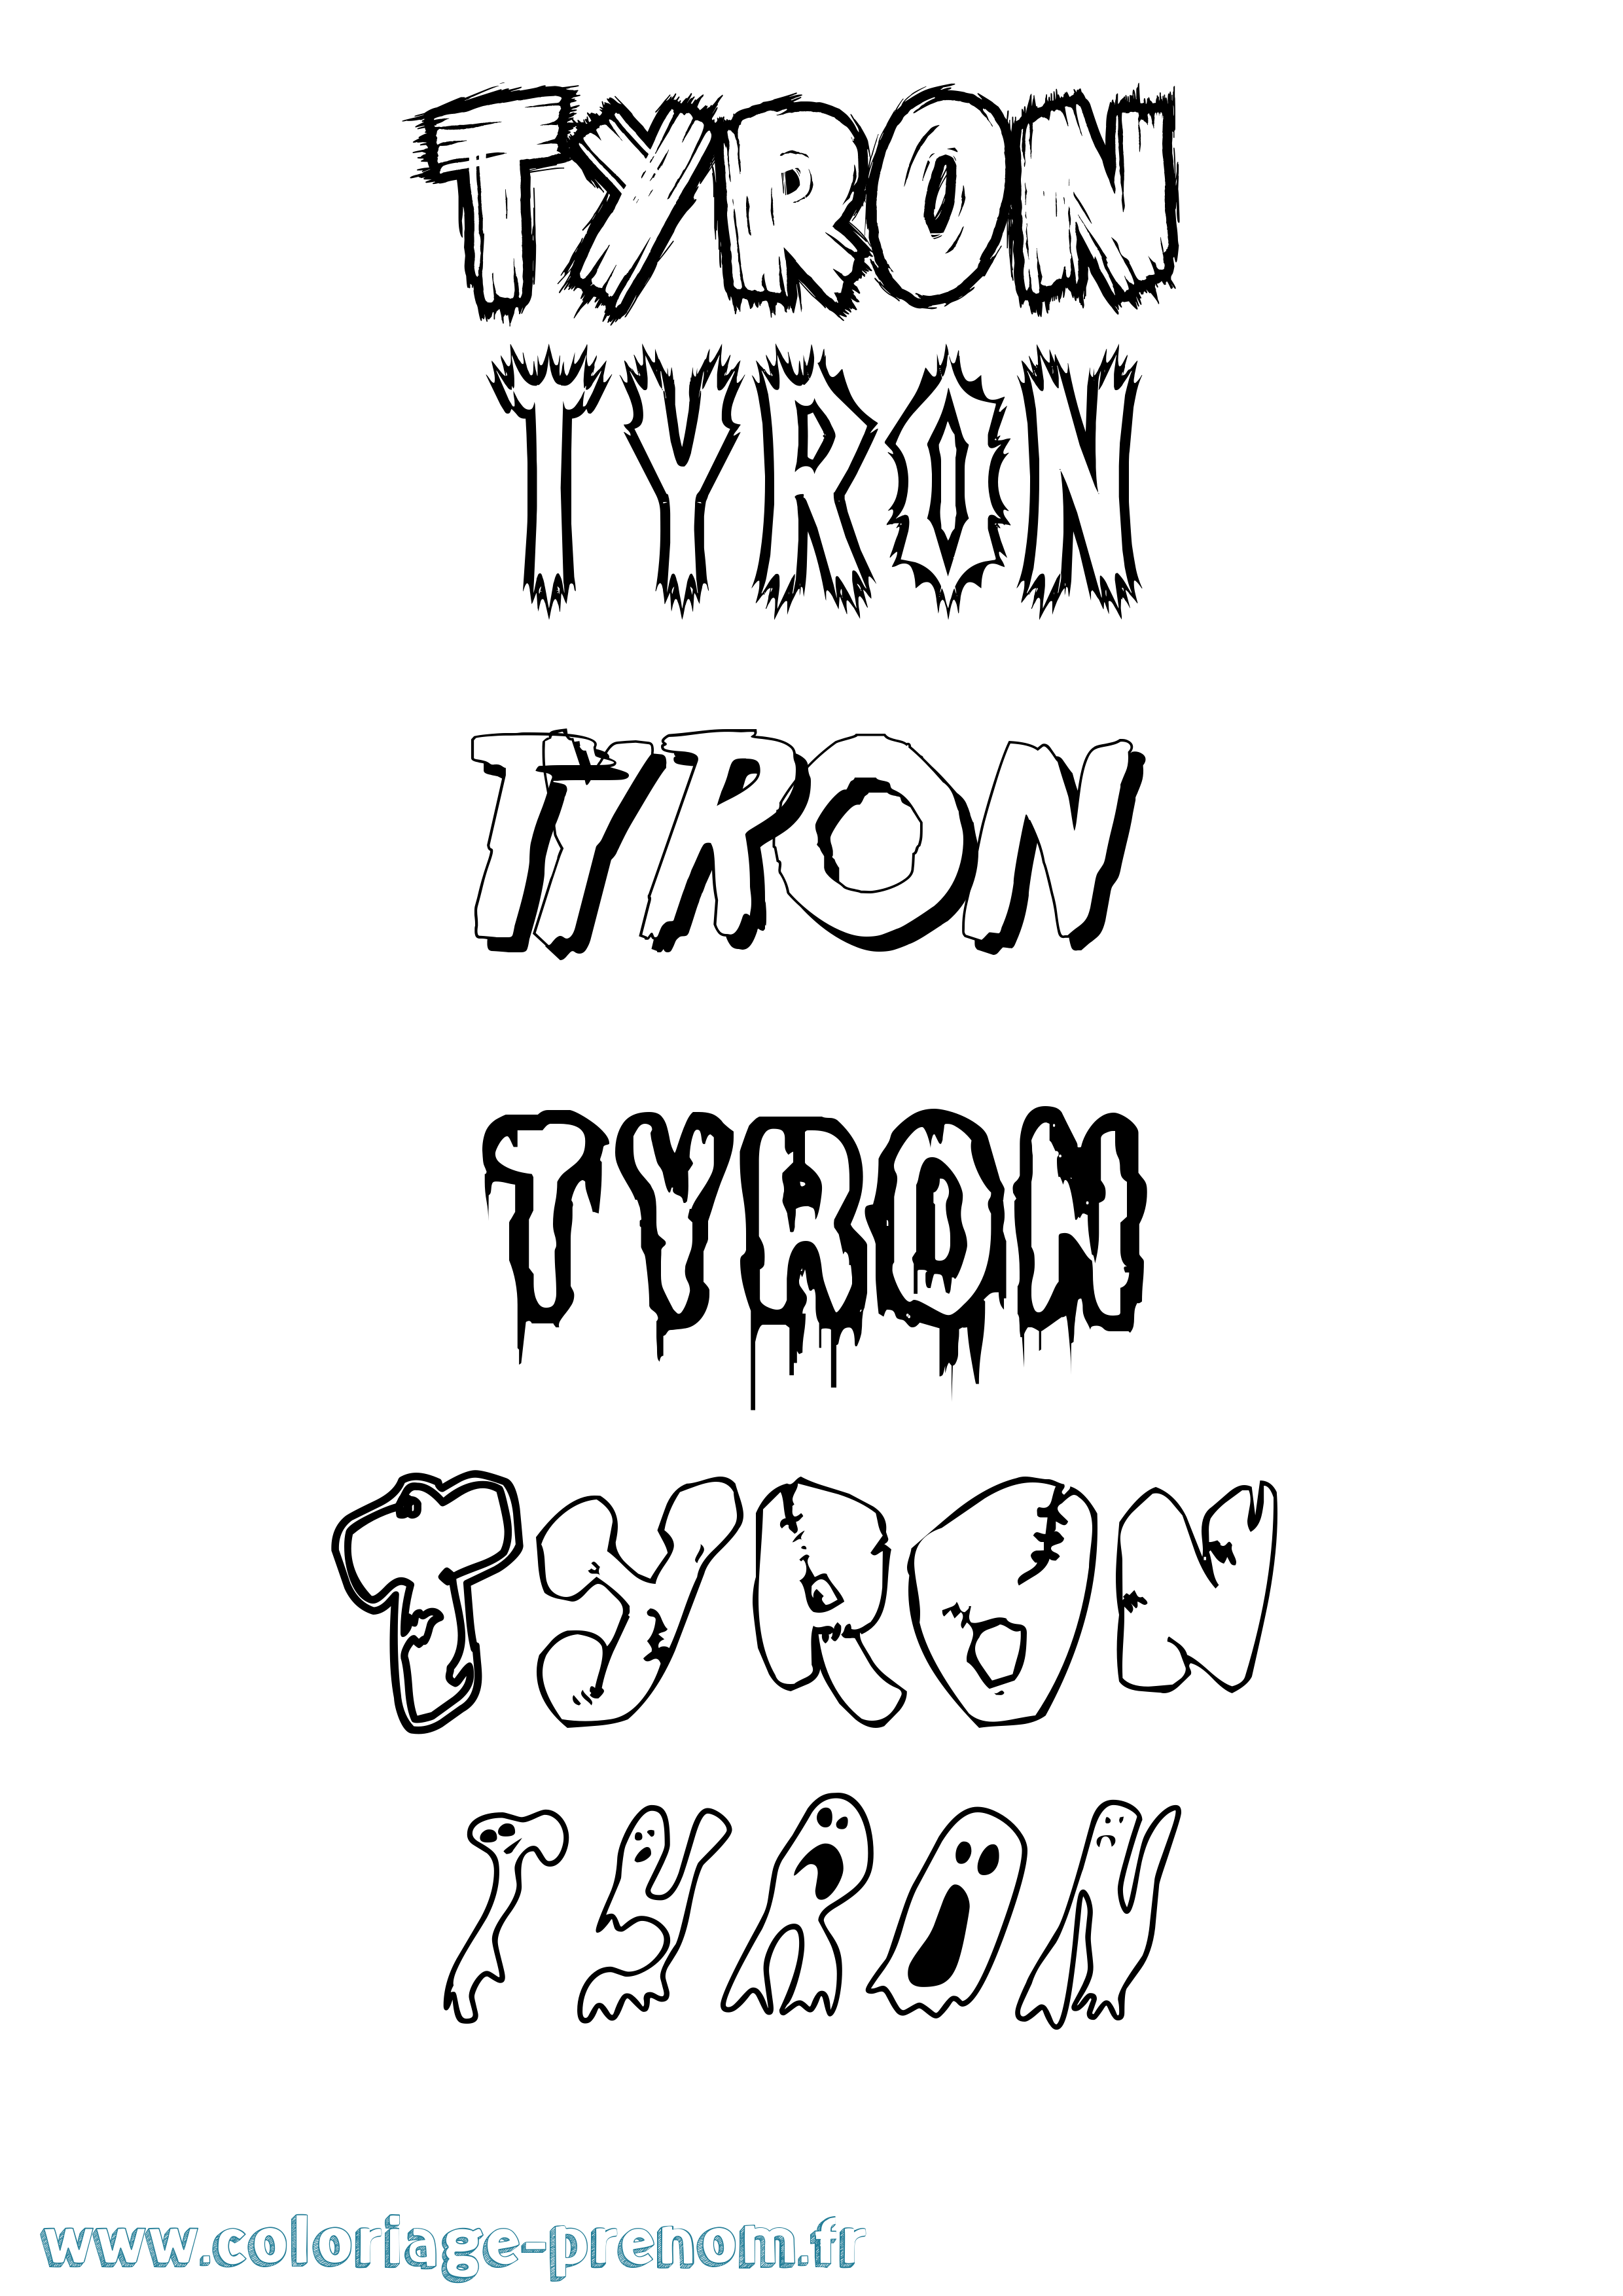 Coloriage prénom Tyron Frisson